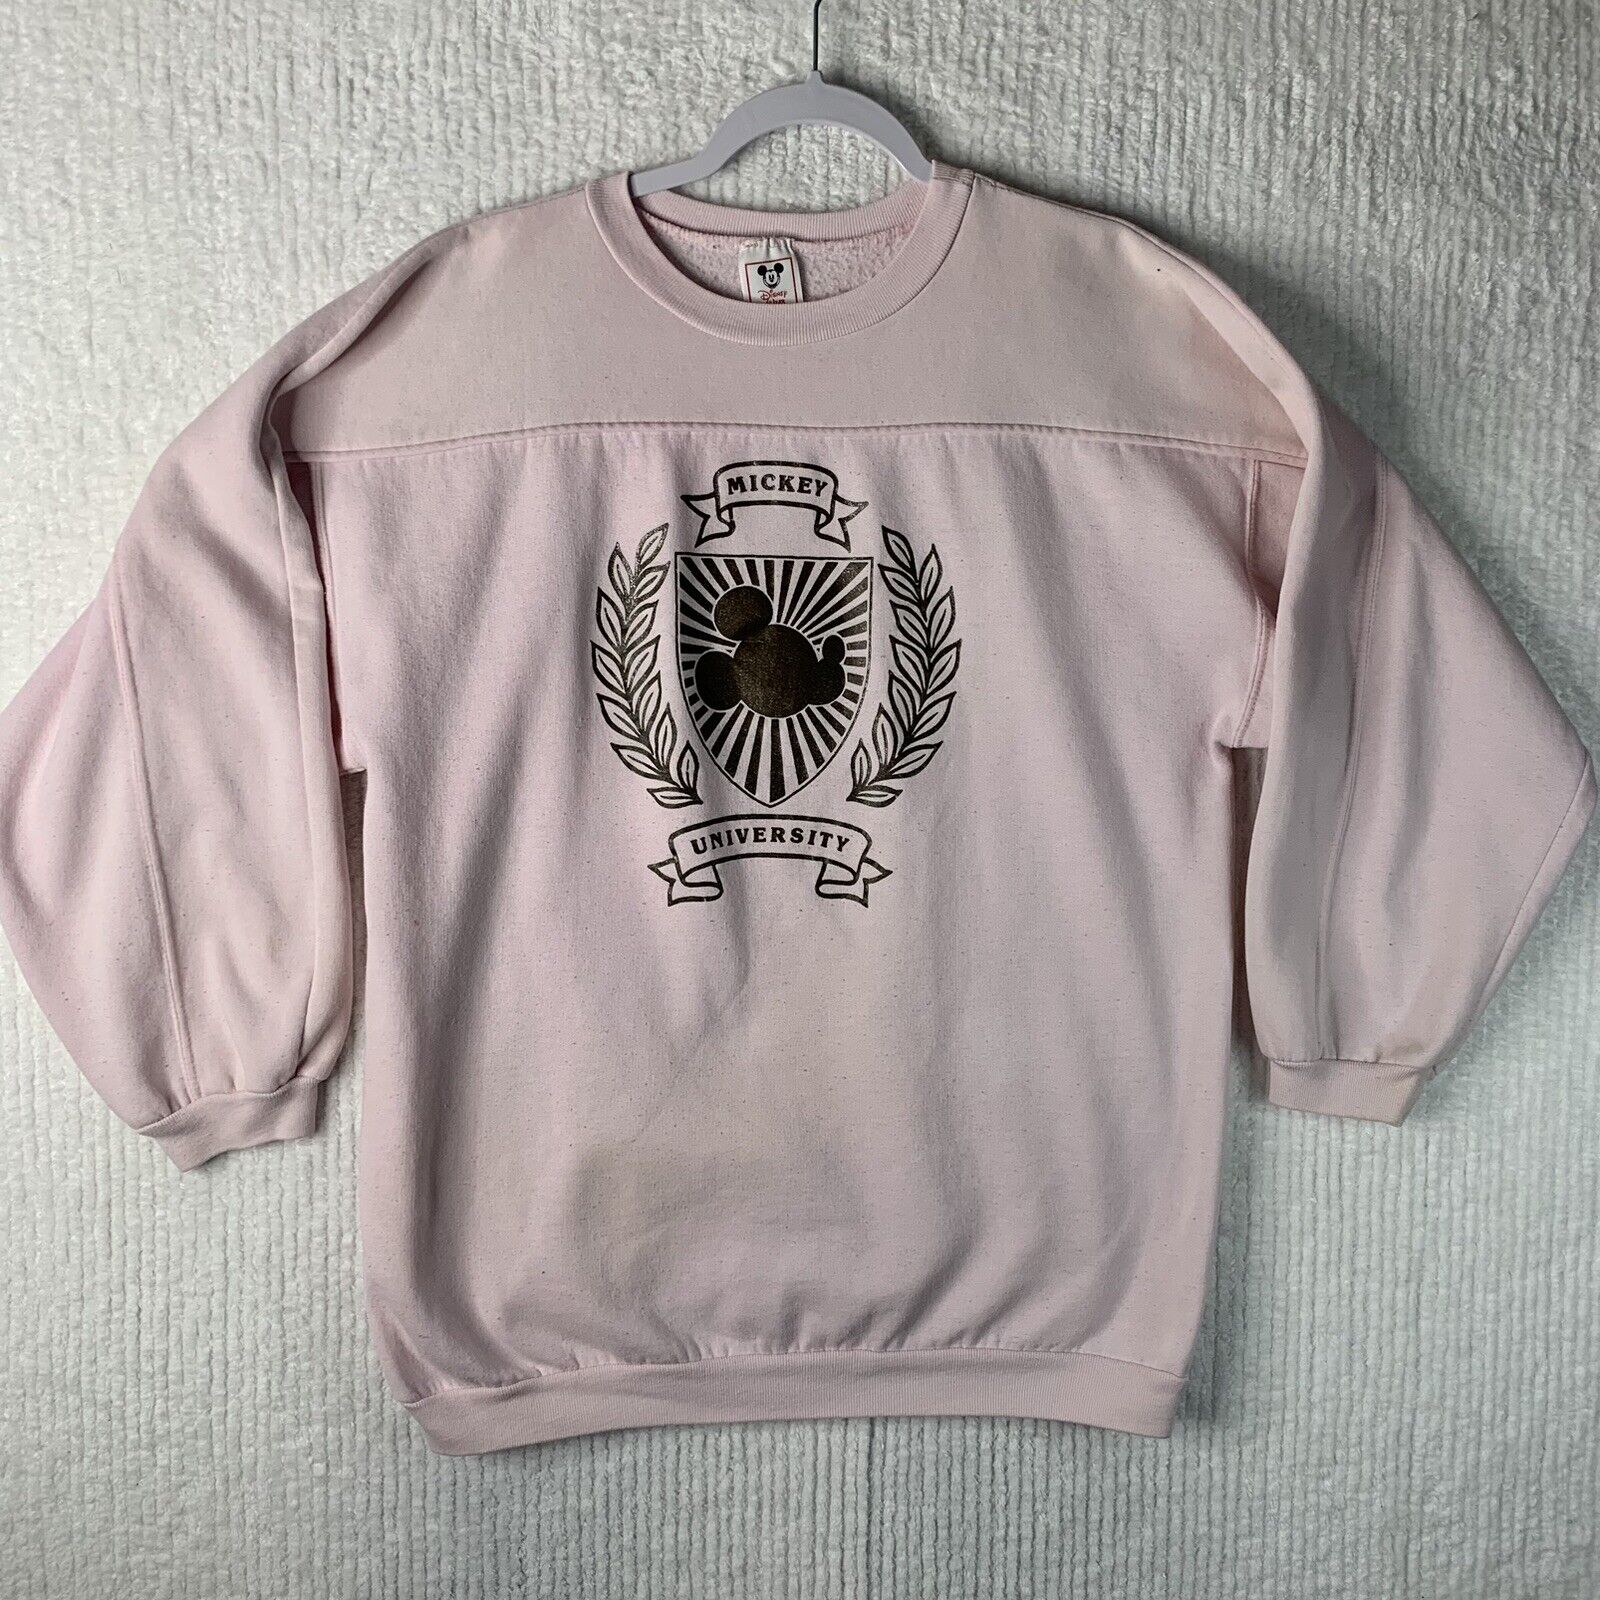 Vintage Disney Mickey University Adult XL Sweatshirt Pink Made In USA